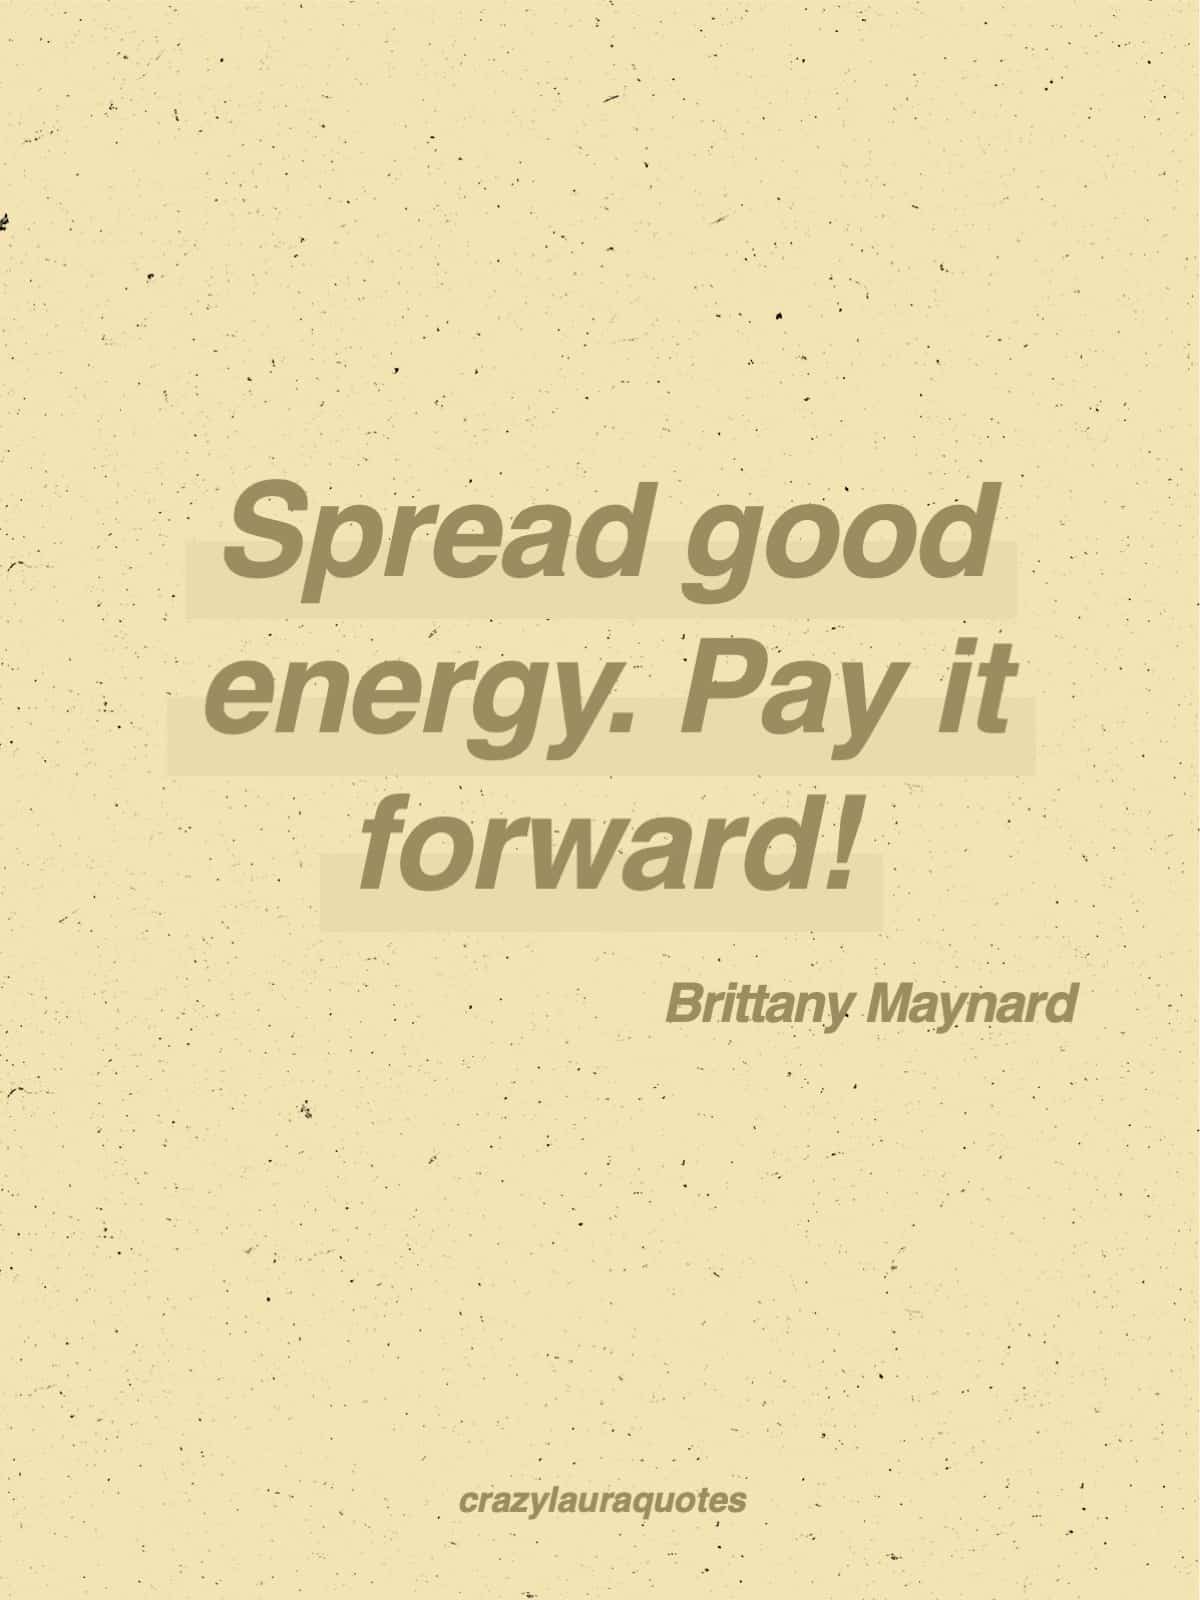 spread good energy brittany maynard quote